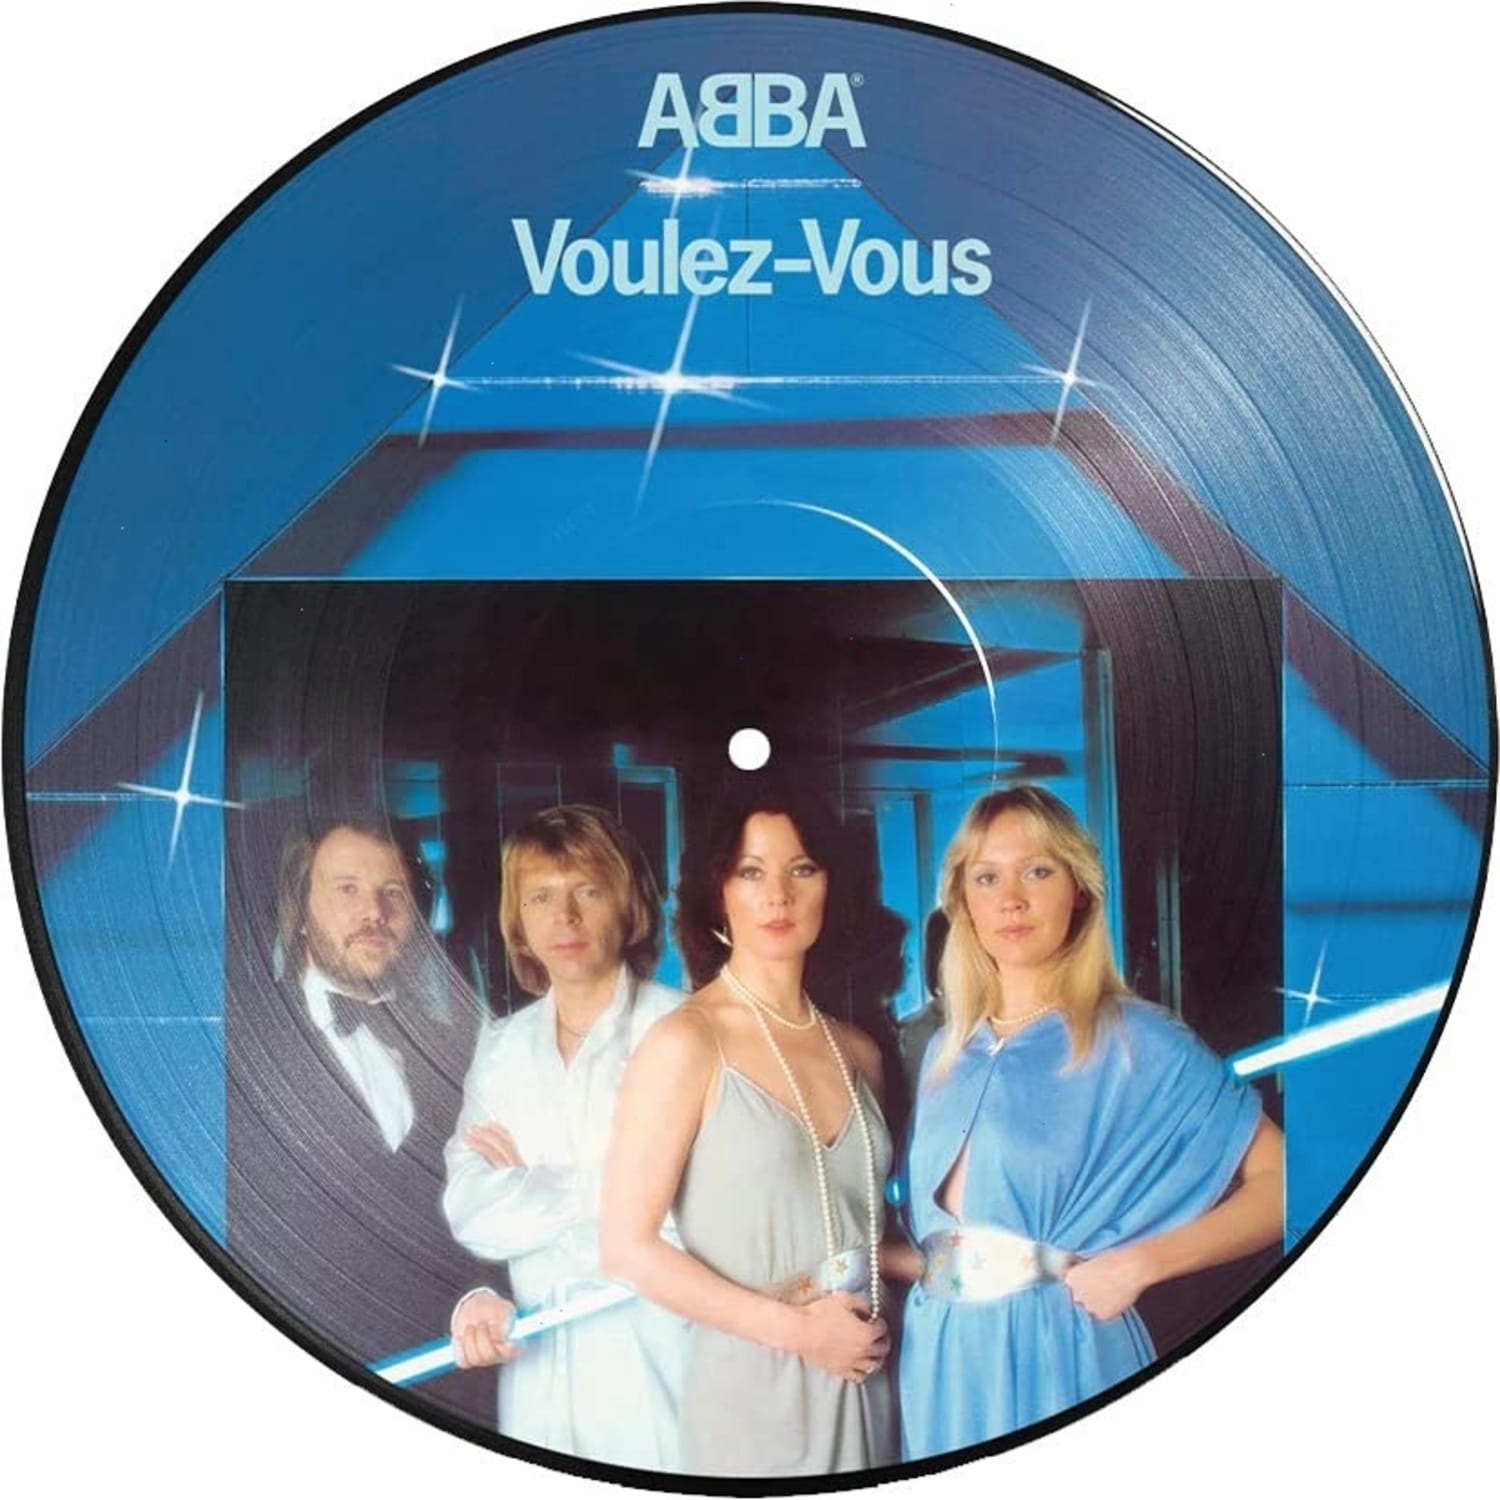 ABBA – Voulez-Vous – Limited Picture Disc Pressing (Vinyl LP) on MovieShack